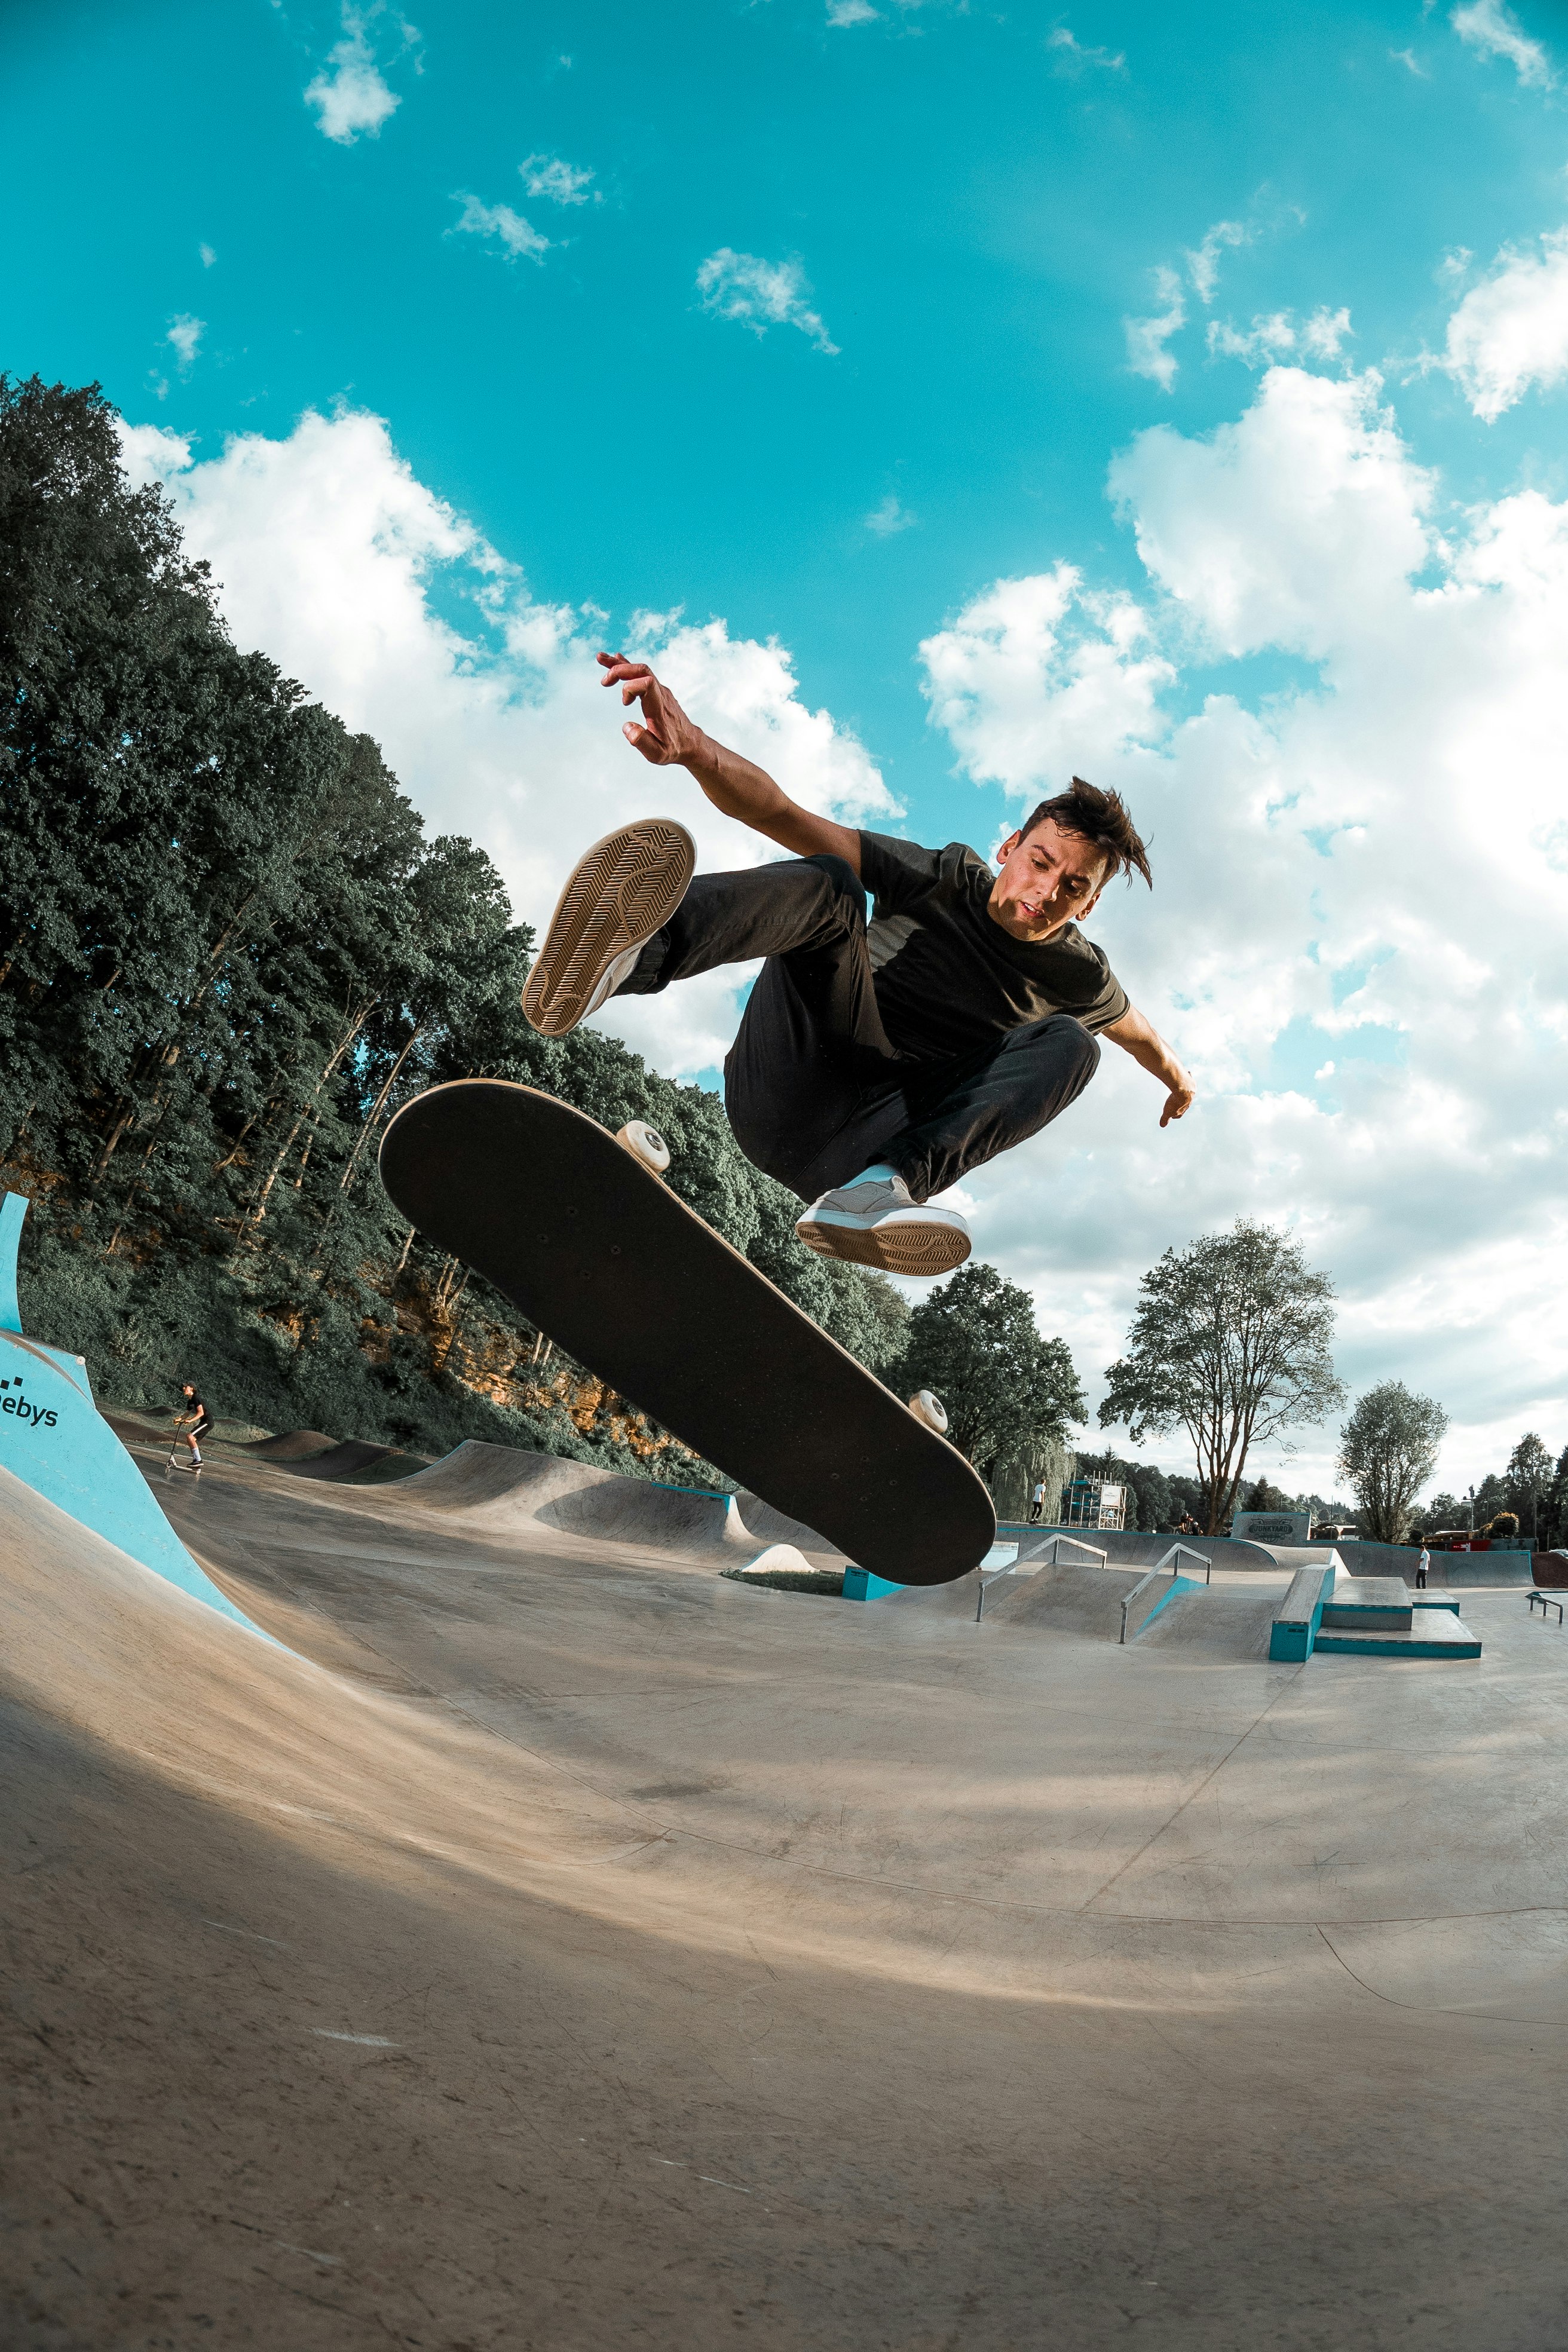 Skateboarder (Karel Hospodka) doing a kick flip
